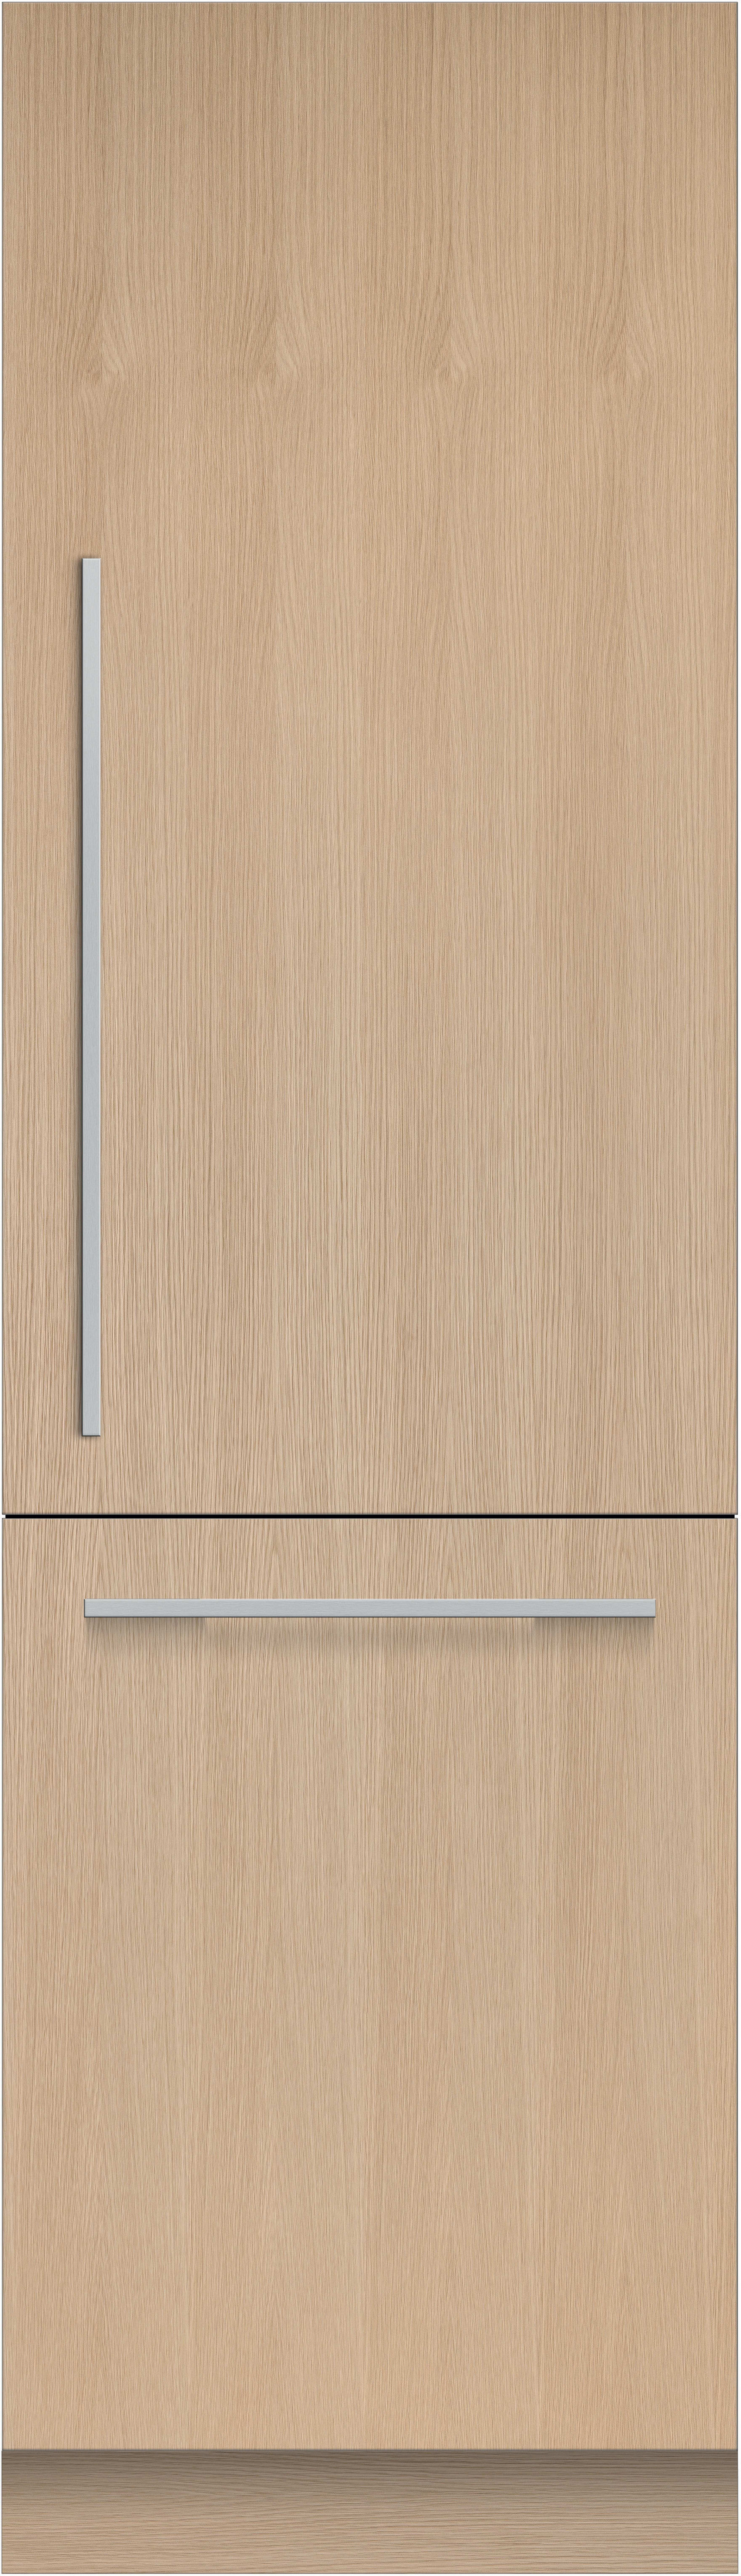 24 Inch Panel Ready Built-In Bottom Mount Refrigerator